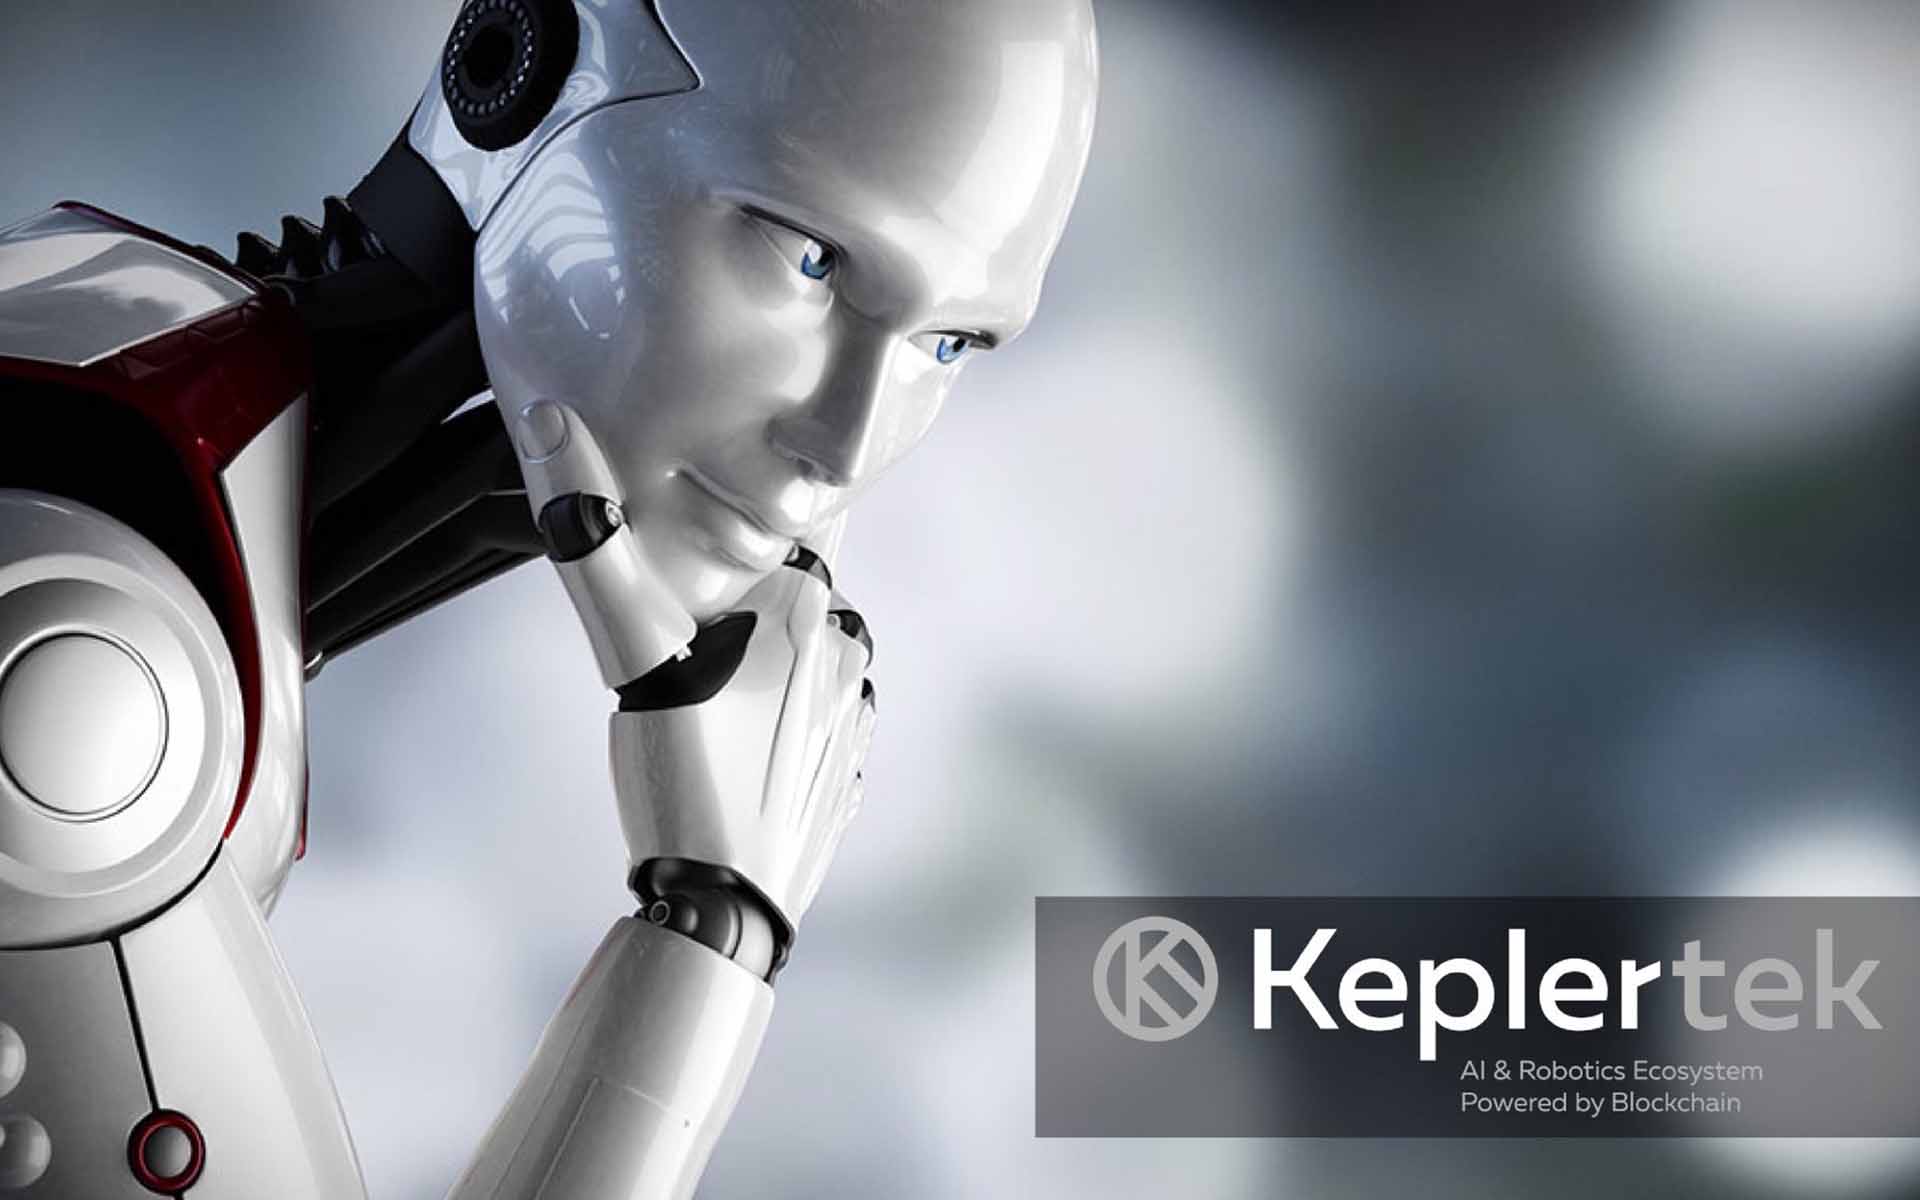 Keplertek: Special Sale Due to Incredible Demand (June 19th-June 21st)